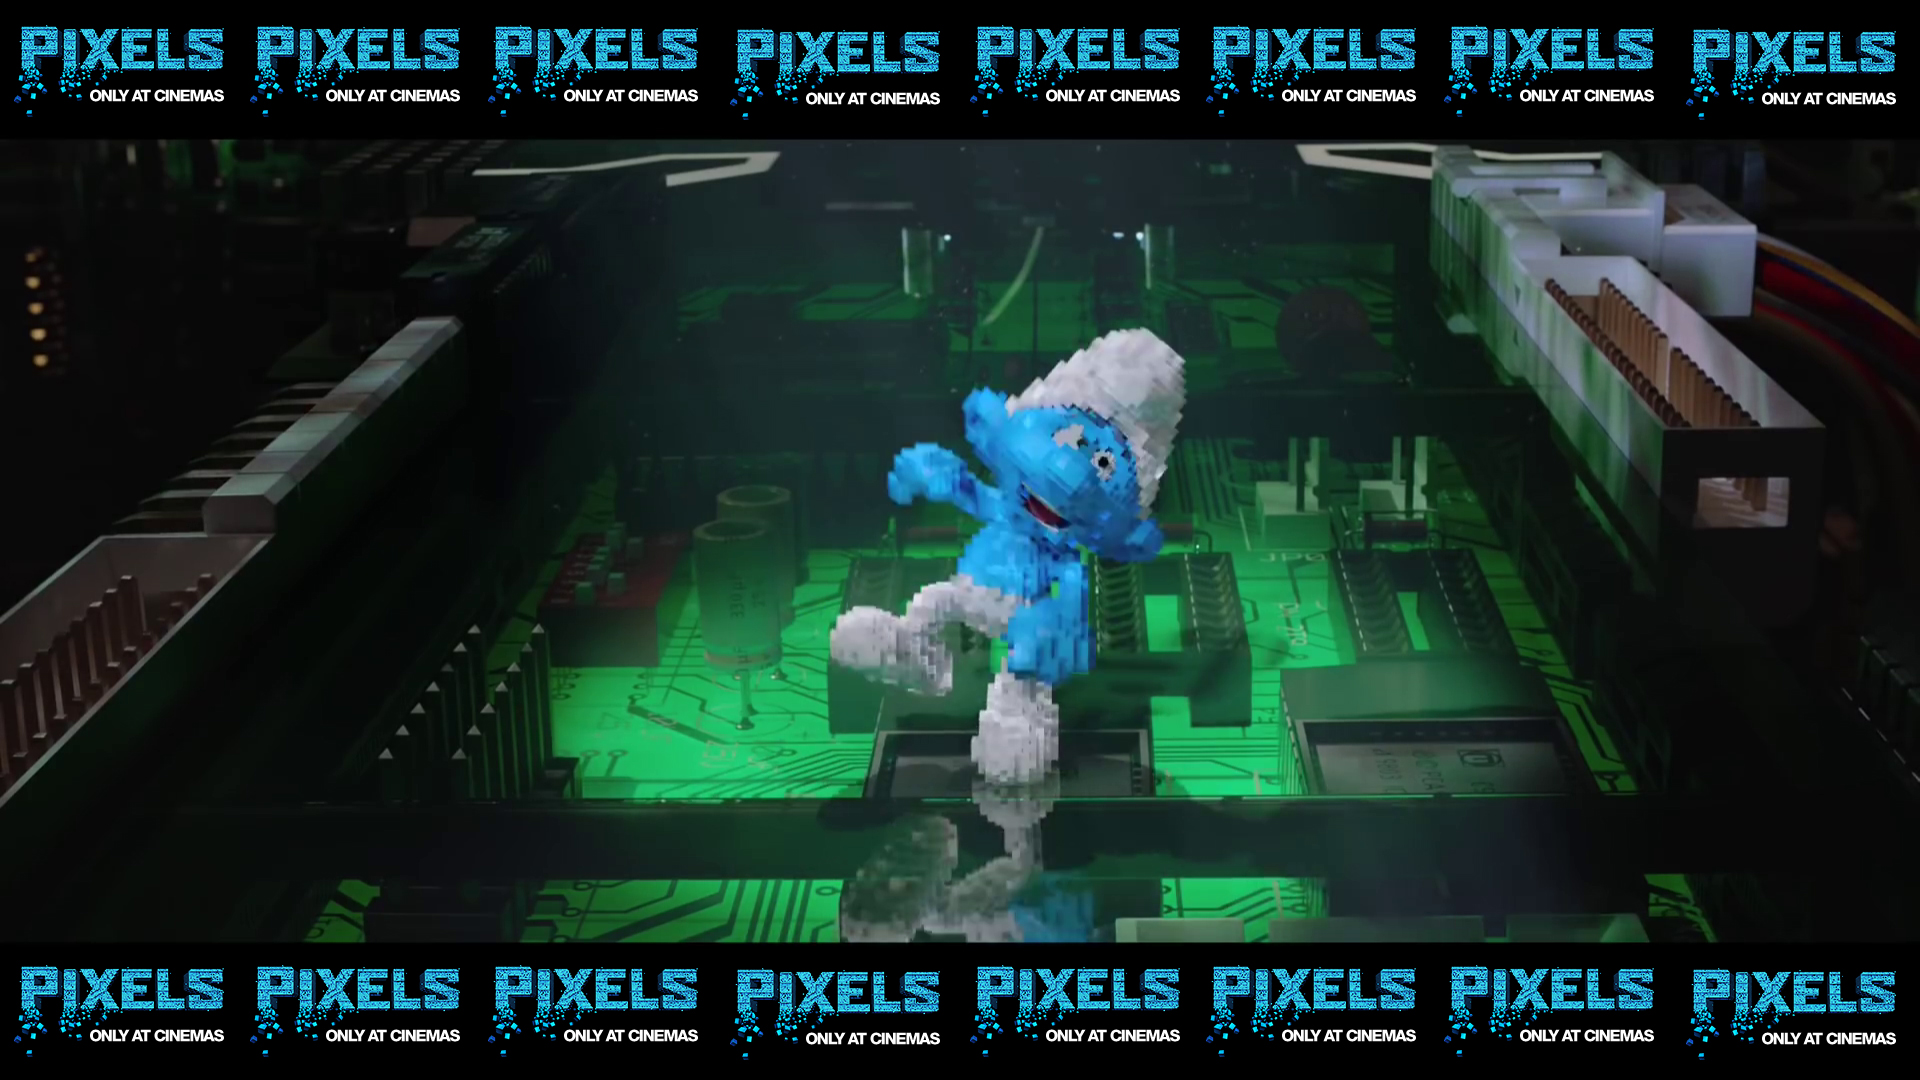 Pixels (2015): Movie HD Wallpapers & HD Still Shots | Page 2 of 4 | Volganga1920 x 1080